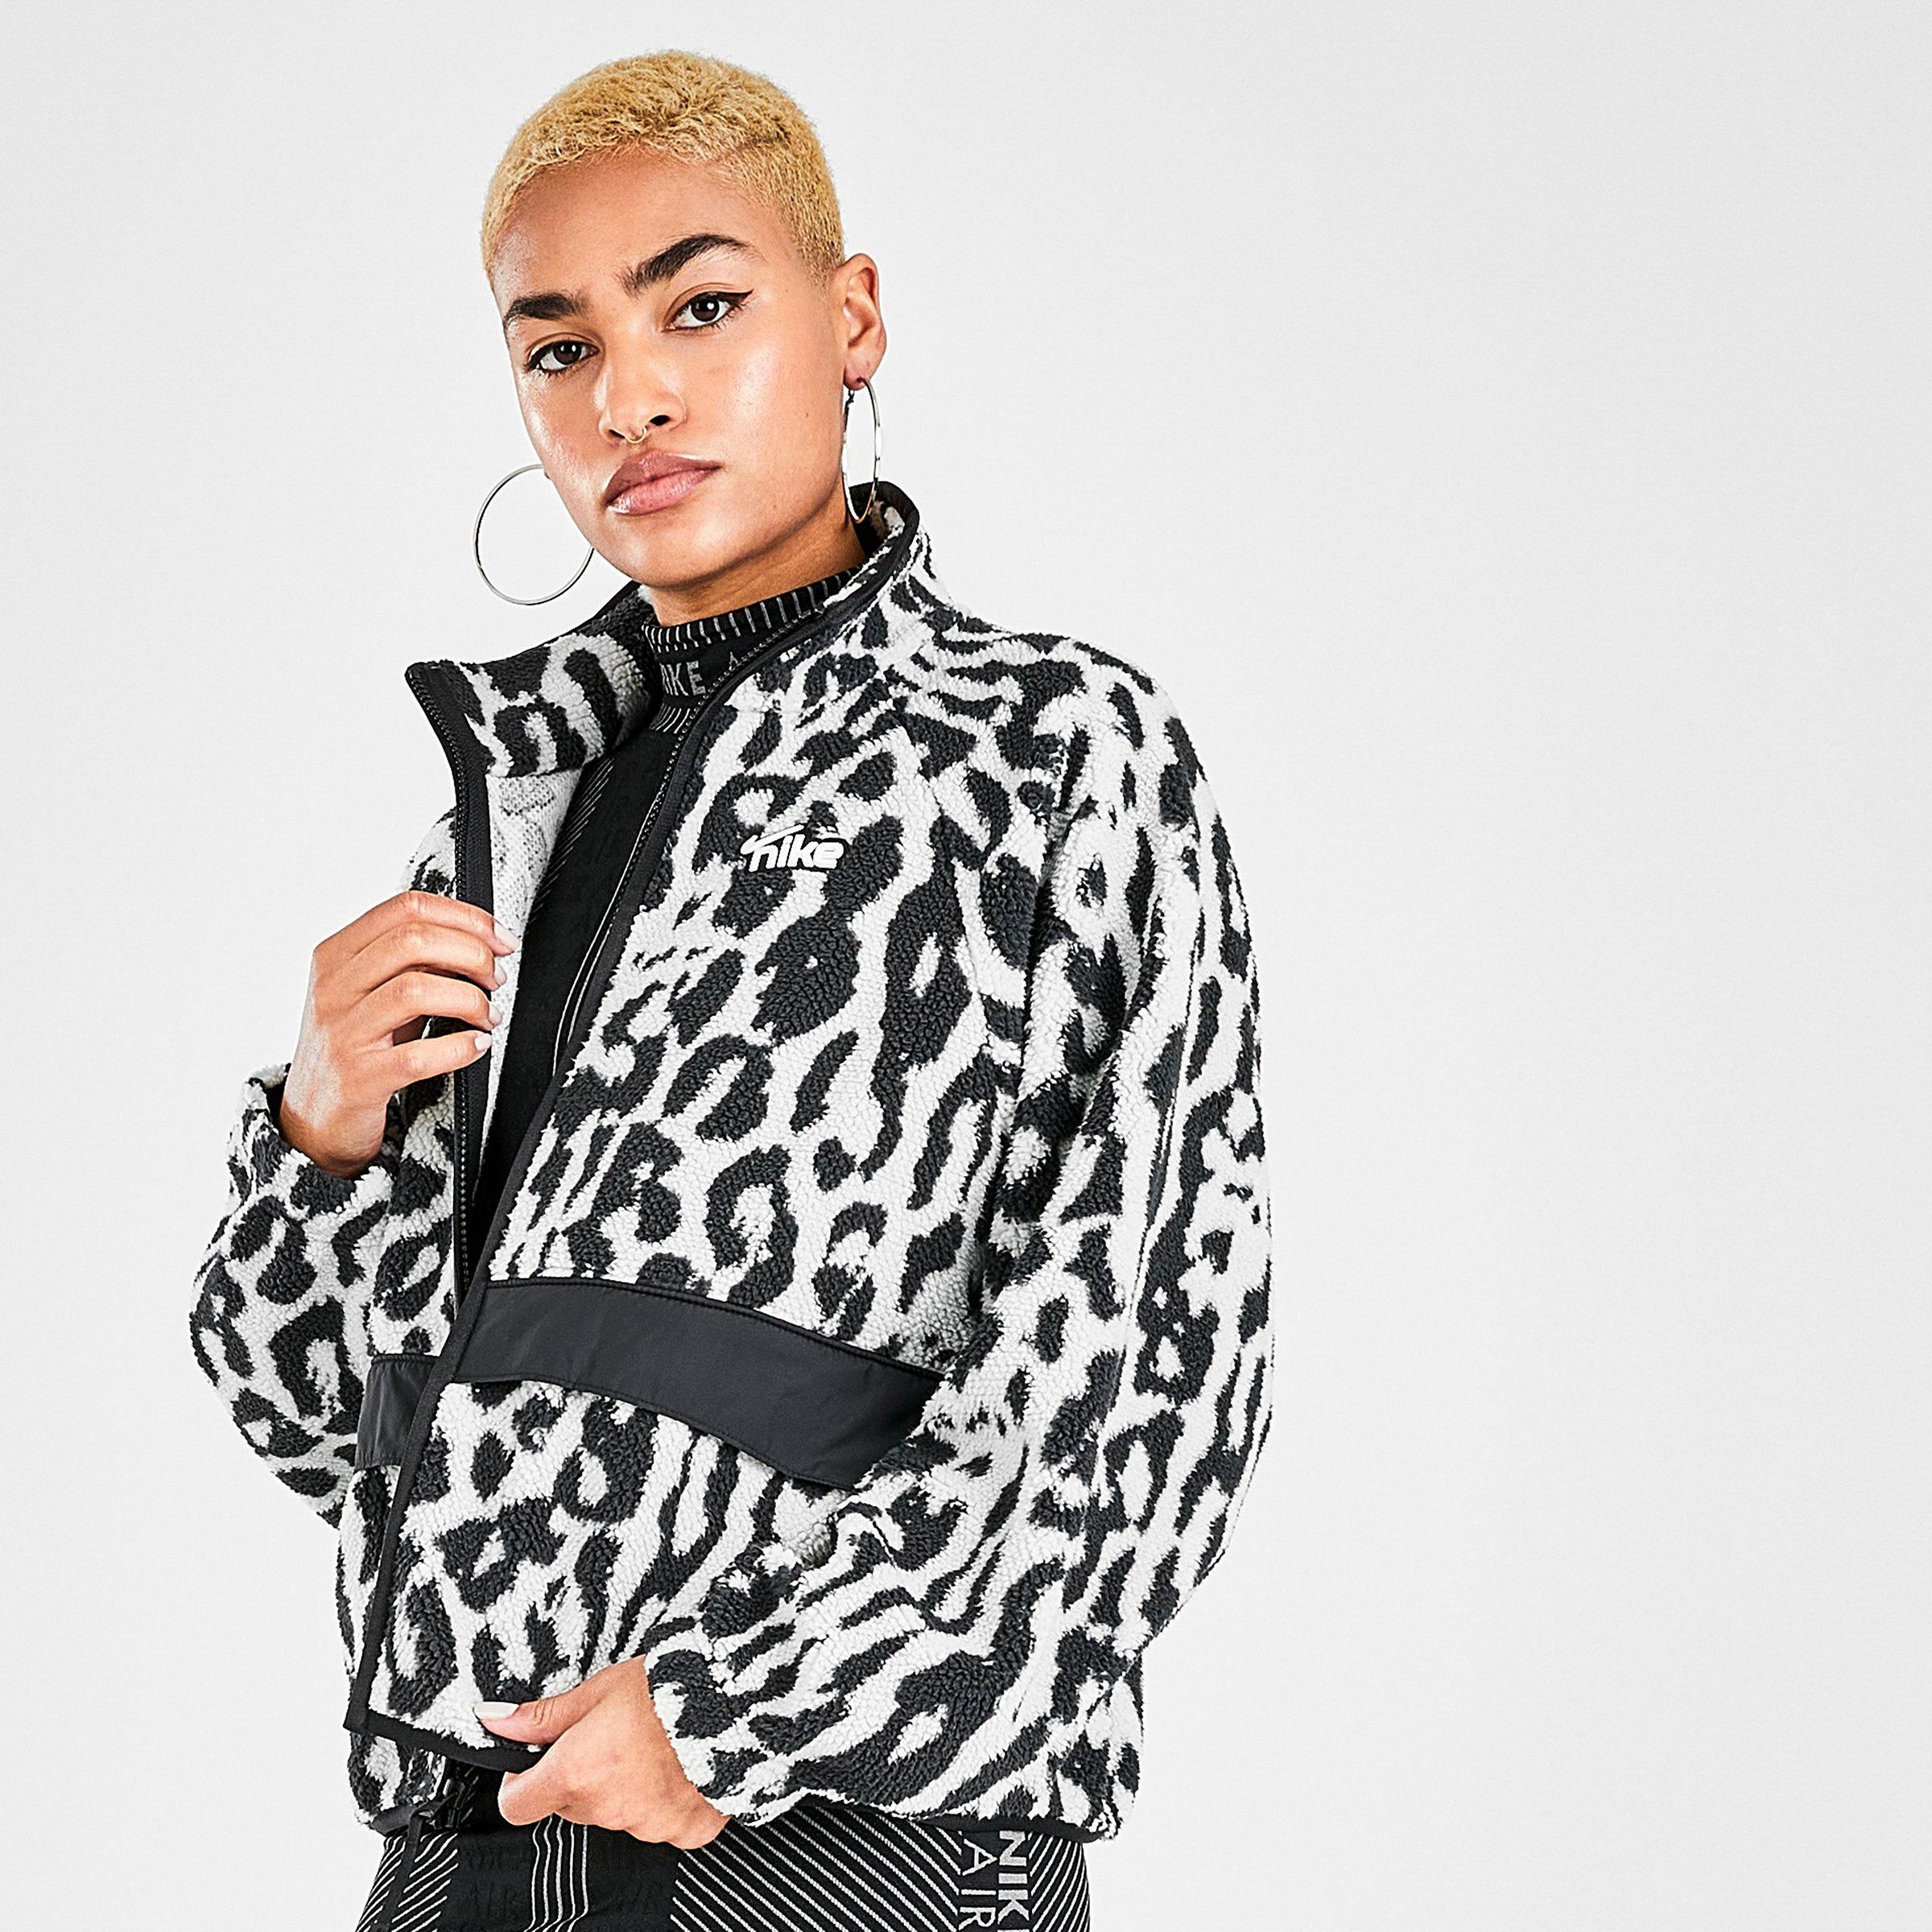 nike cheetah print jacket